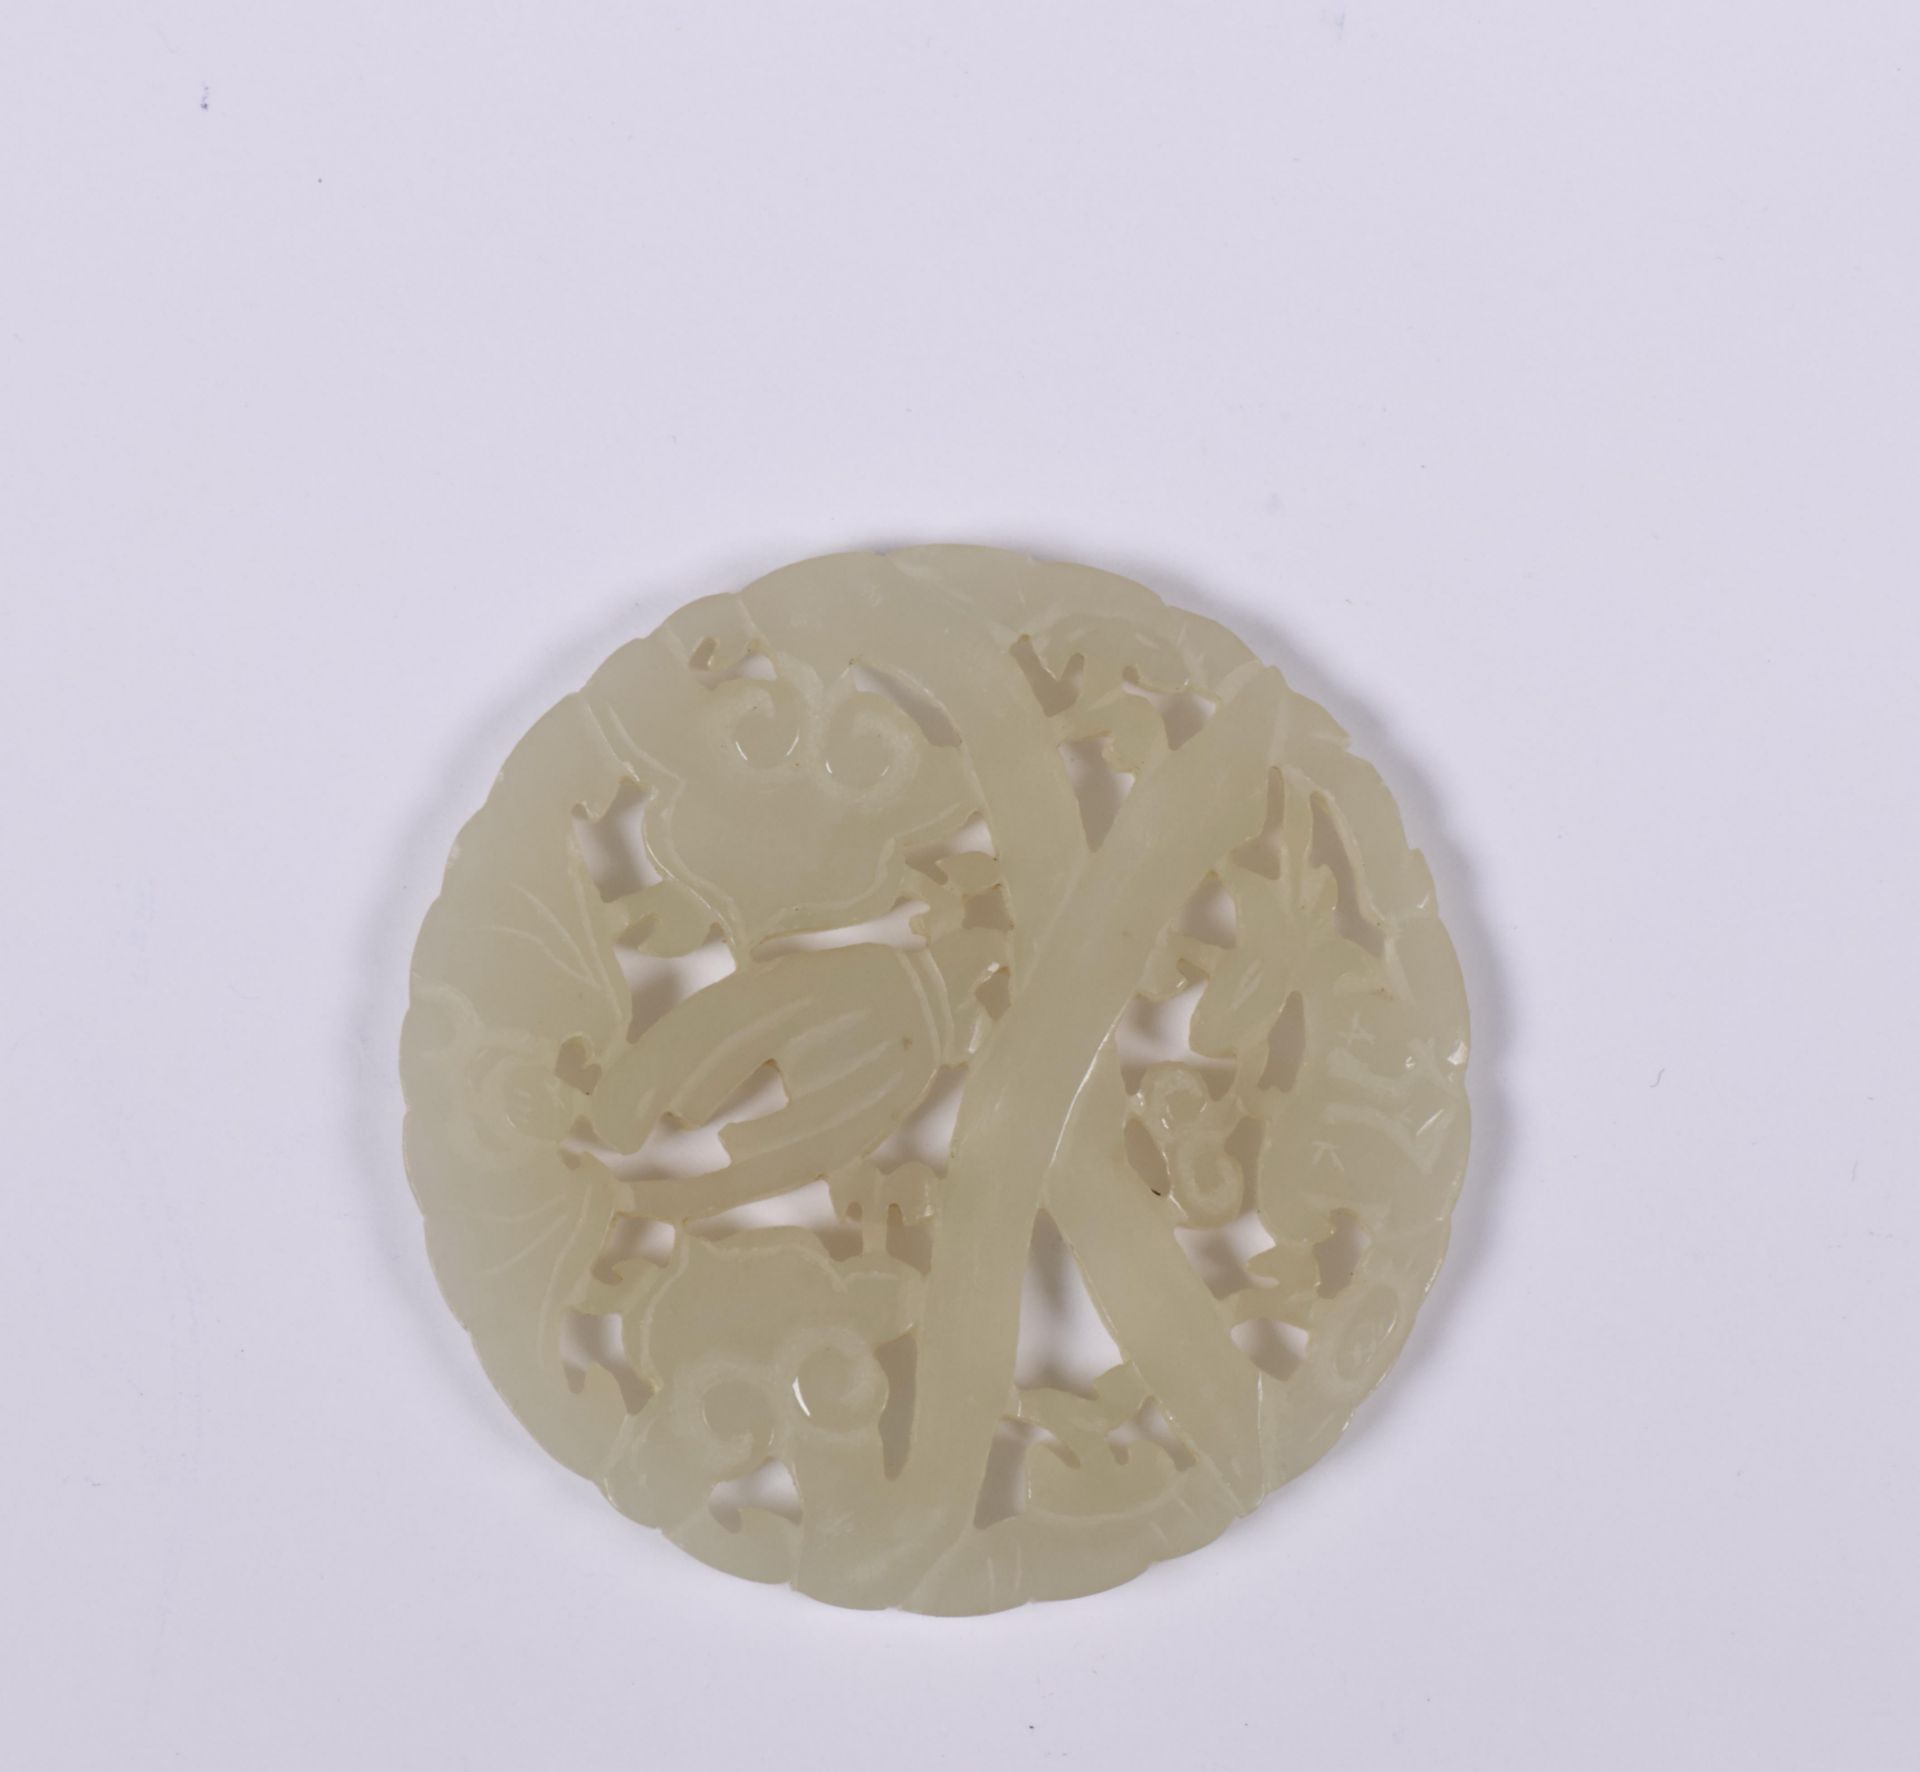 China, celadon jade pendant, - Image 2 of 2